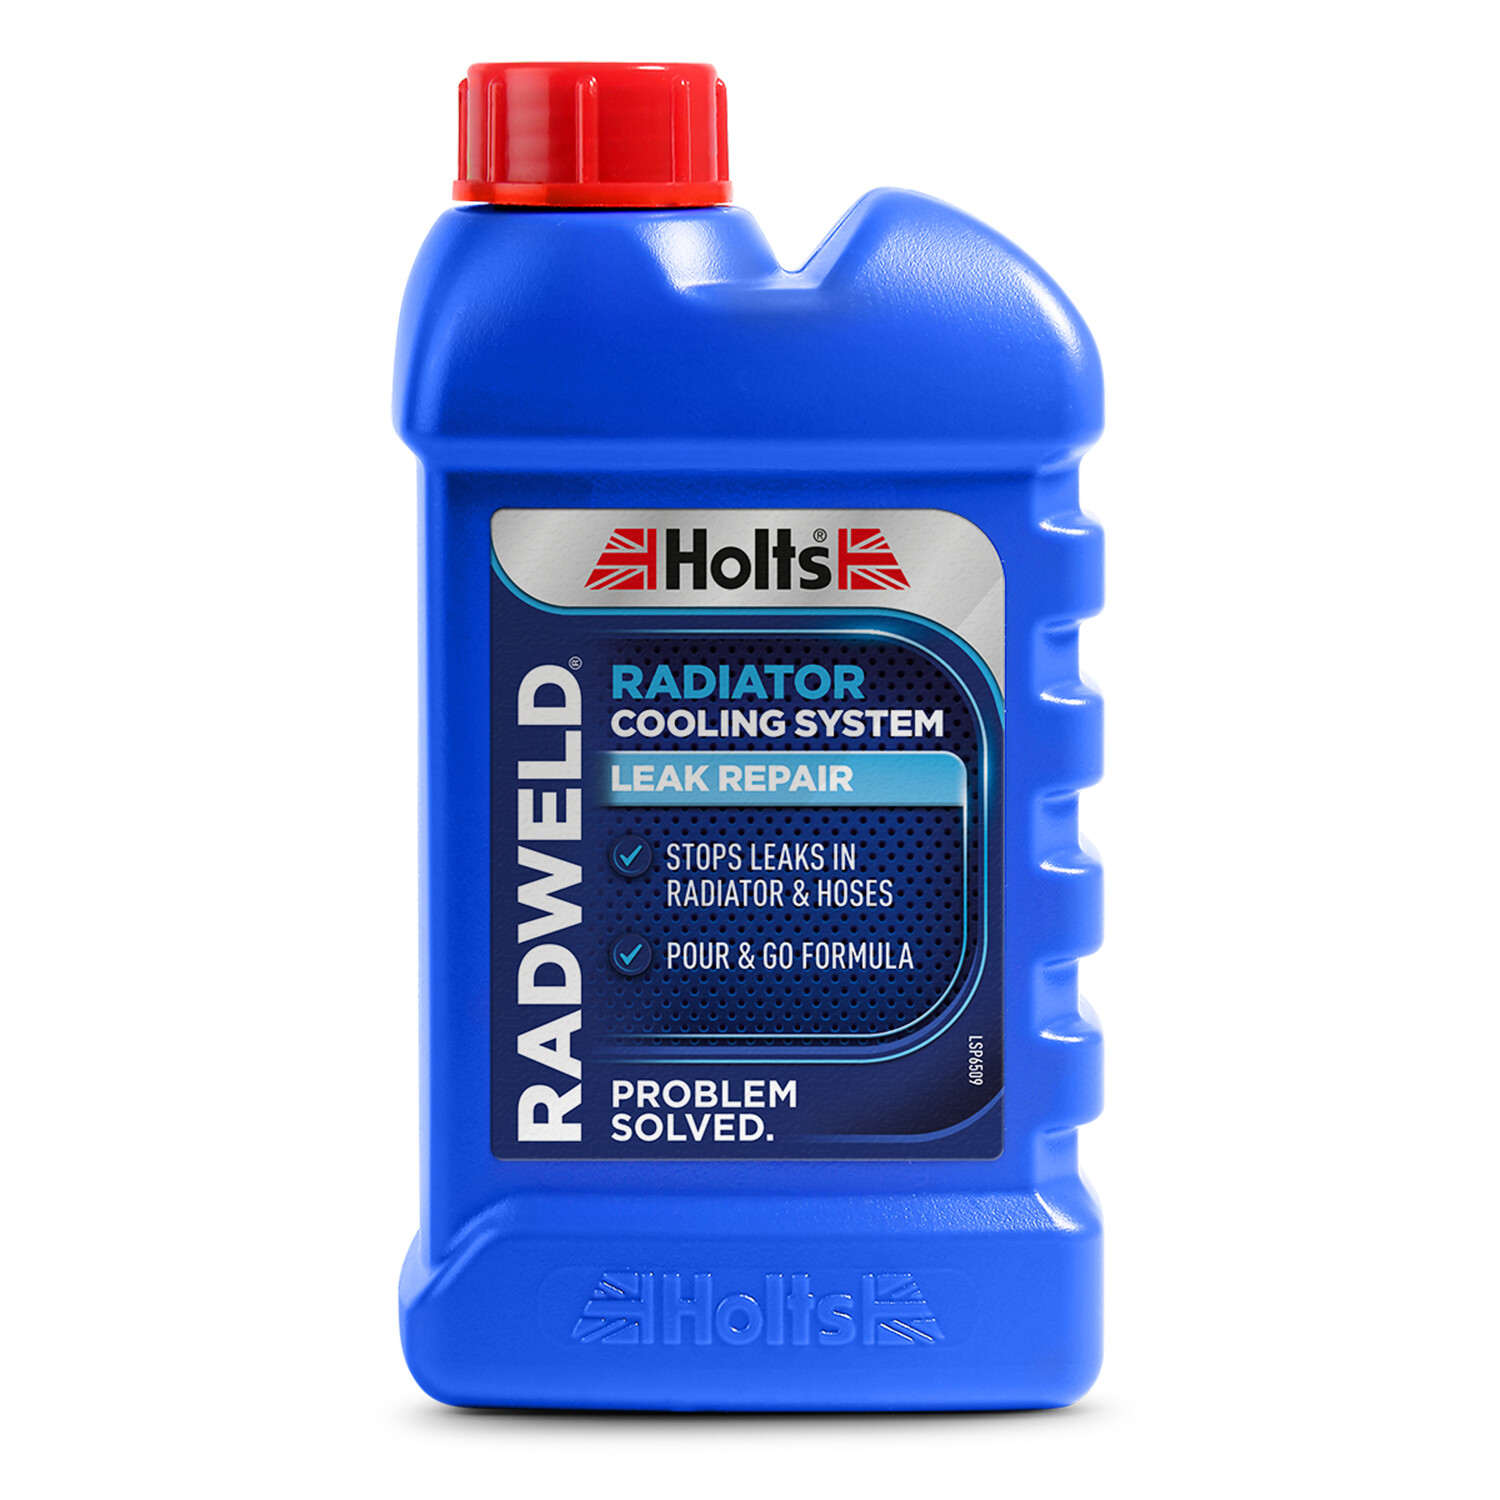 Holts Radweld Radiator Cooling System Leak Repair 250ml Image